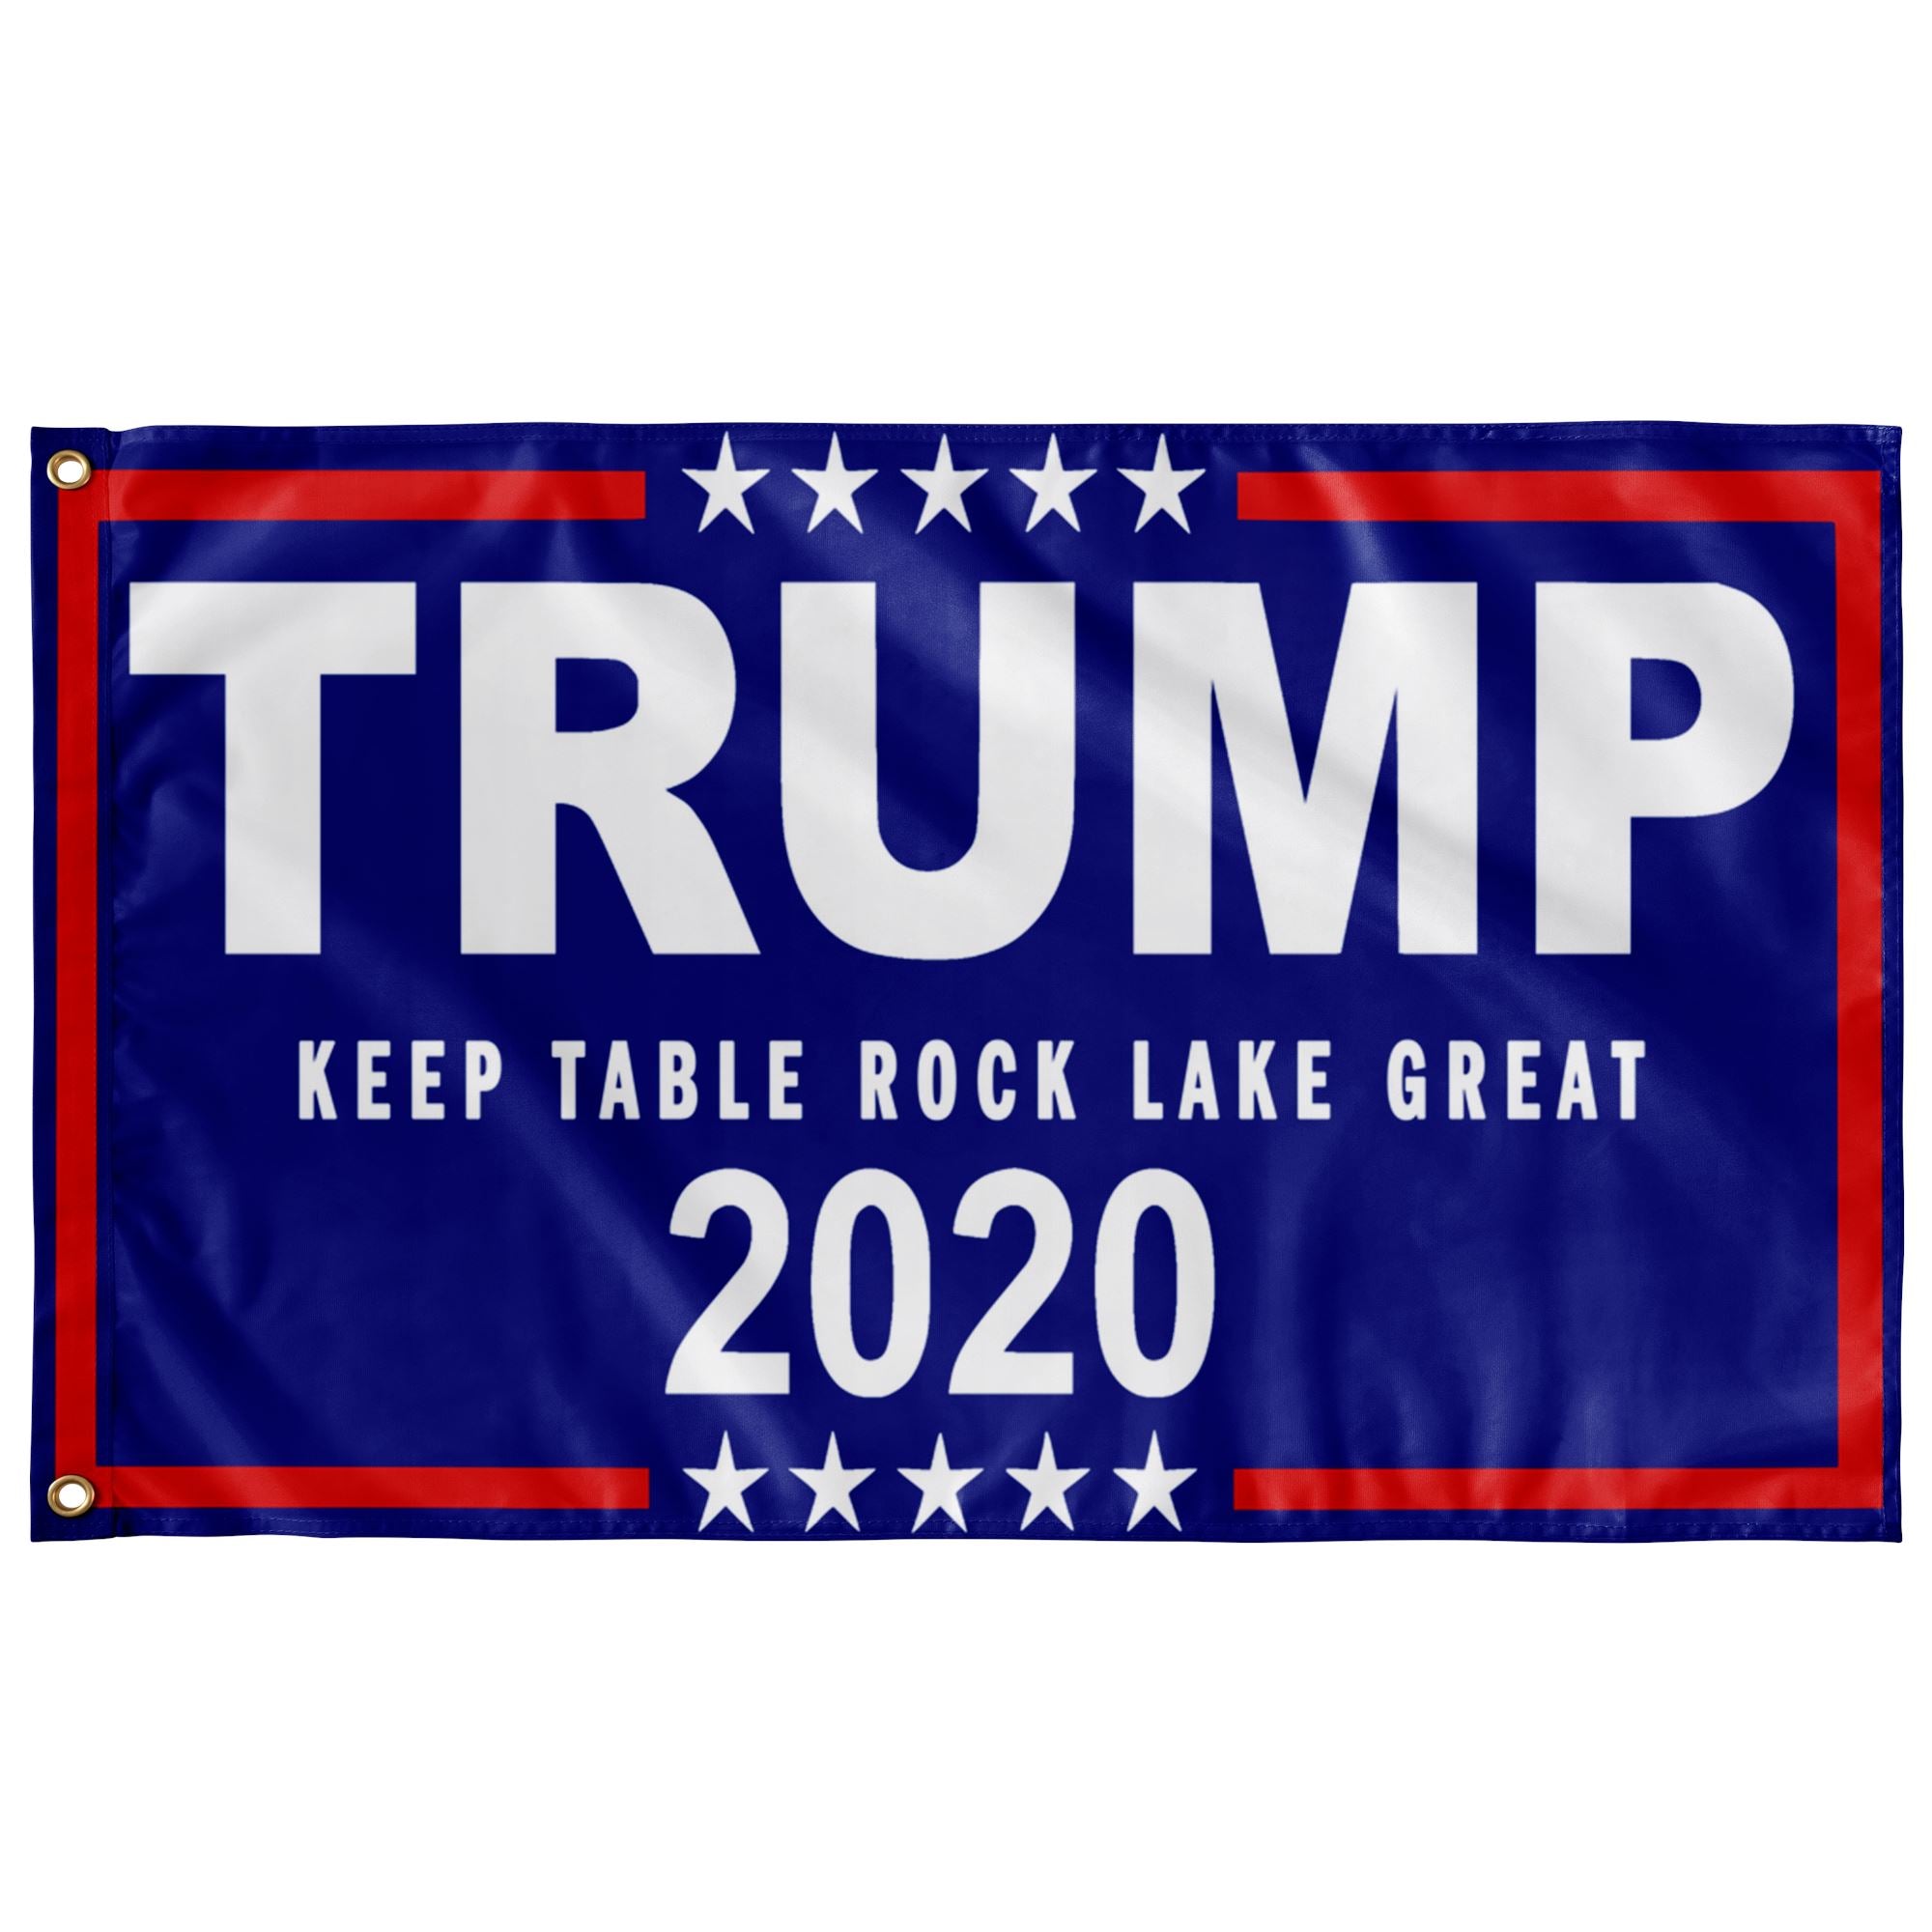 Trump Boat Flag - Keep Table Rock Lake Great - Houseboat Kings